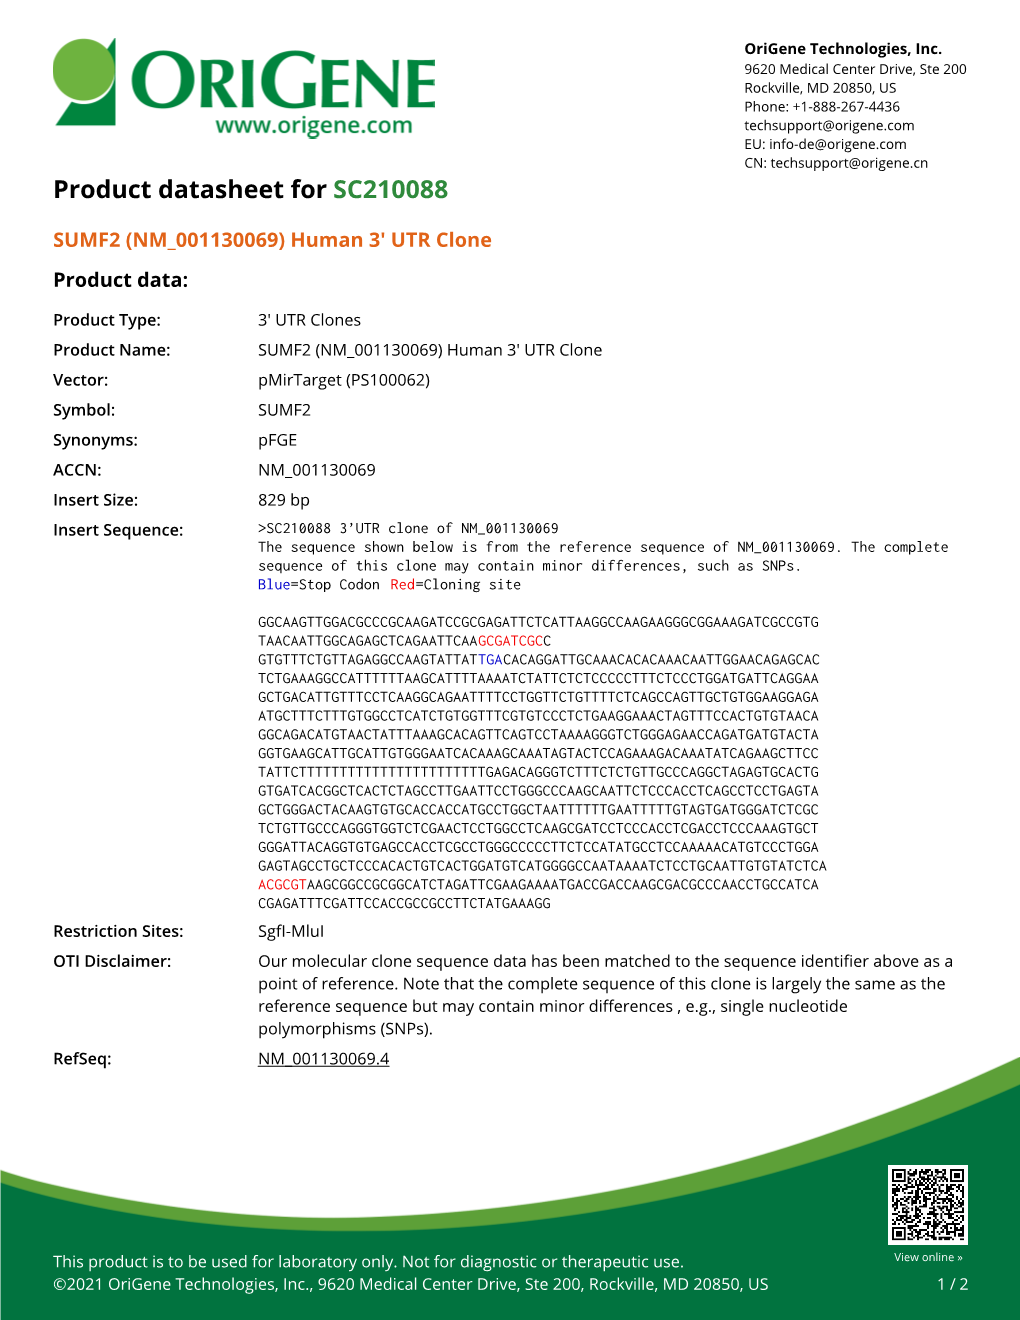 SUMF2 (NM 001130069) Human 3' UTR Clone Product Data